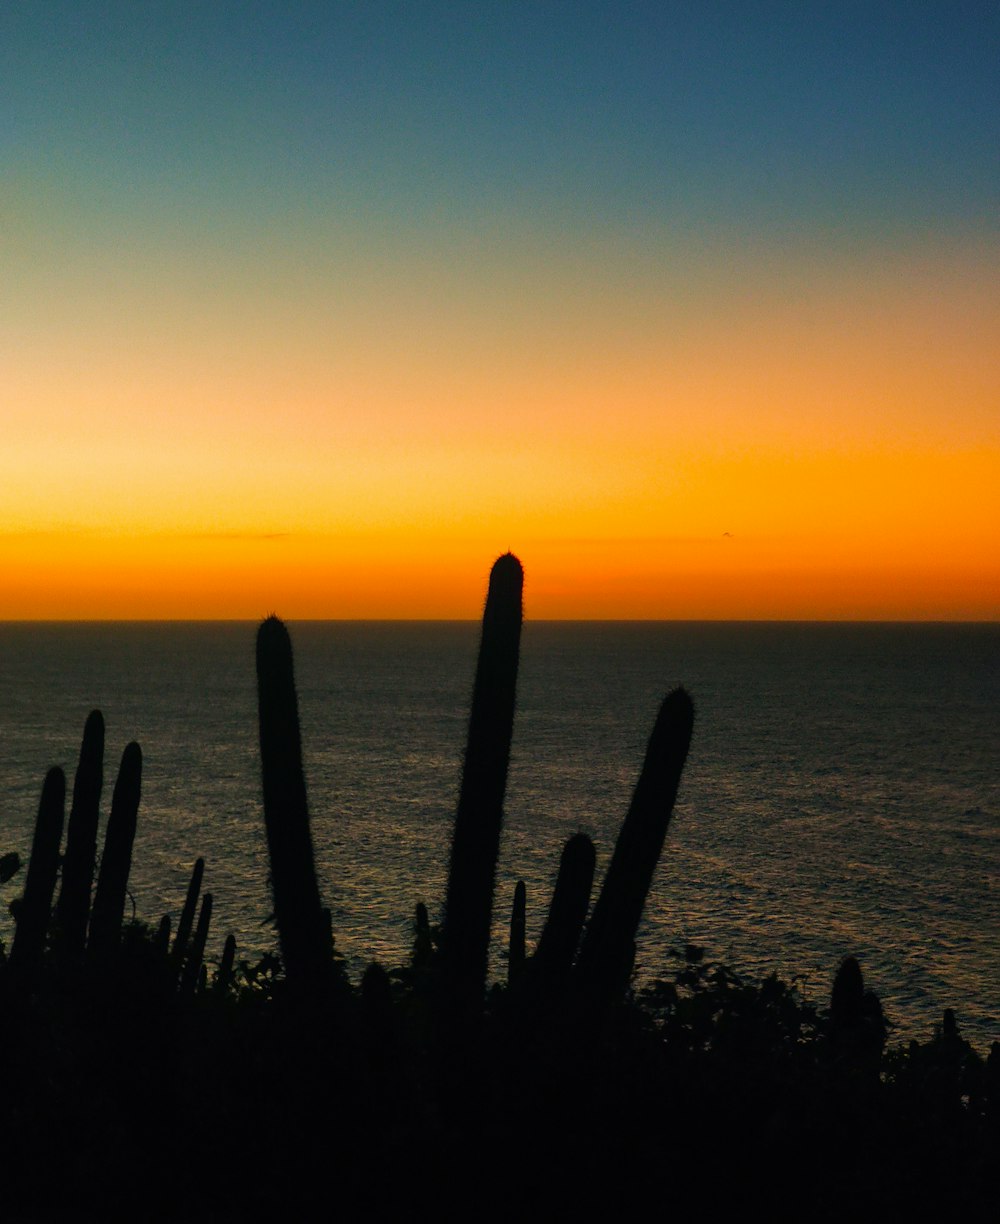 Silhouette des Kaktus bei Sonnenuntergang